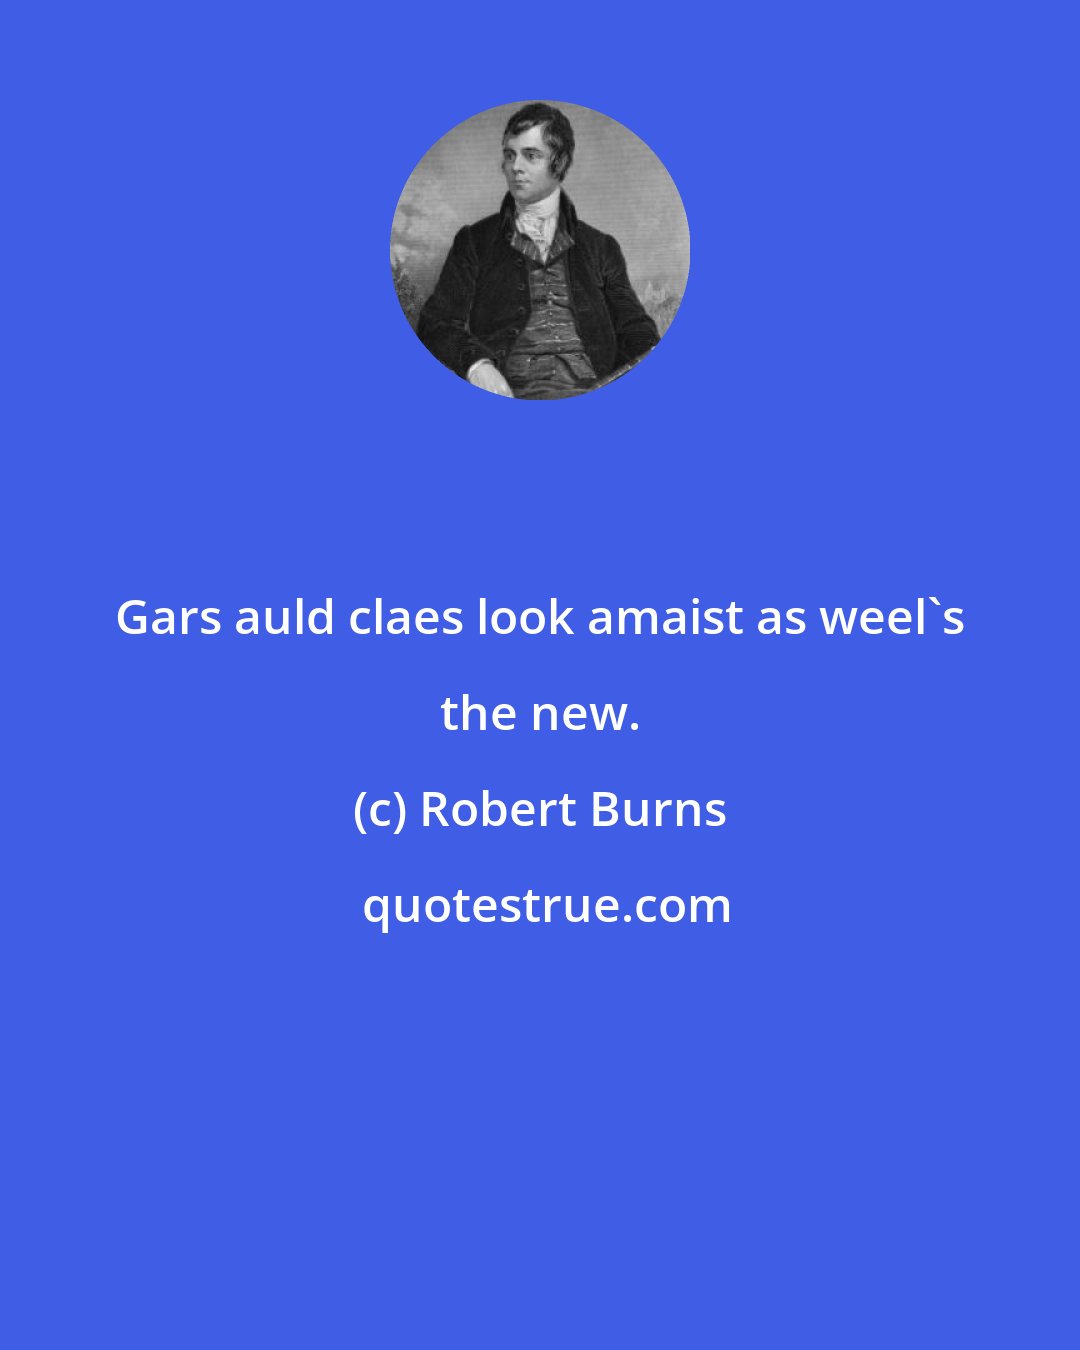 Robert Burns: Gars auld claes look amaist as weel's the new.